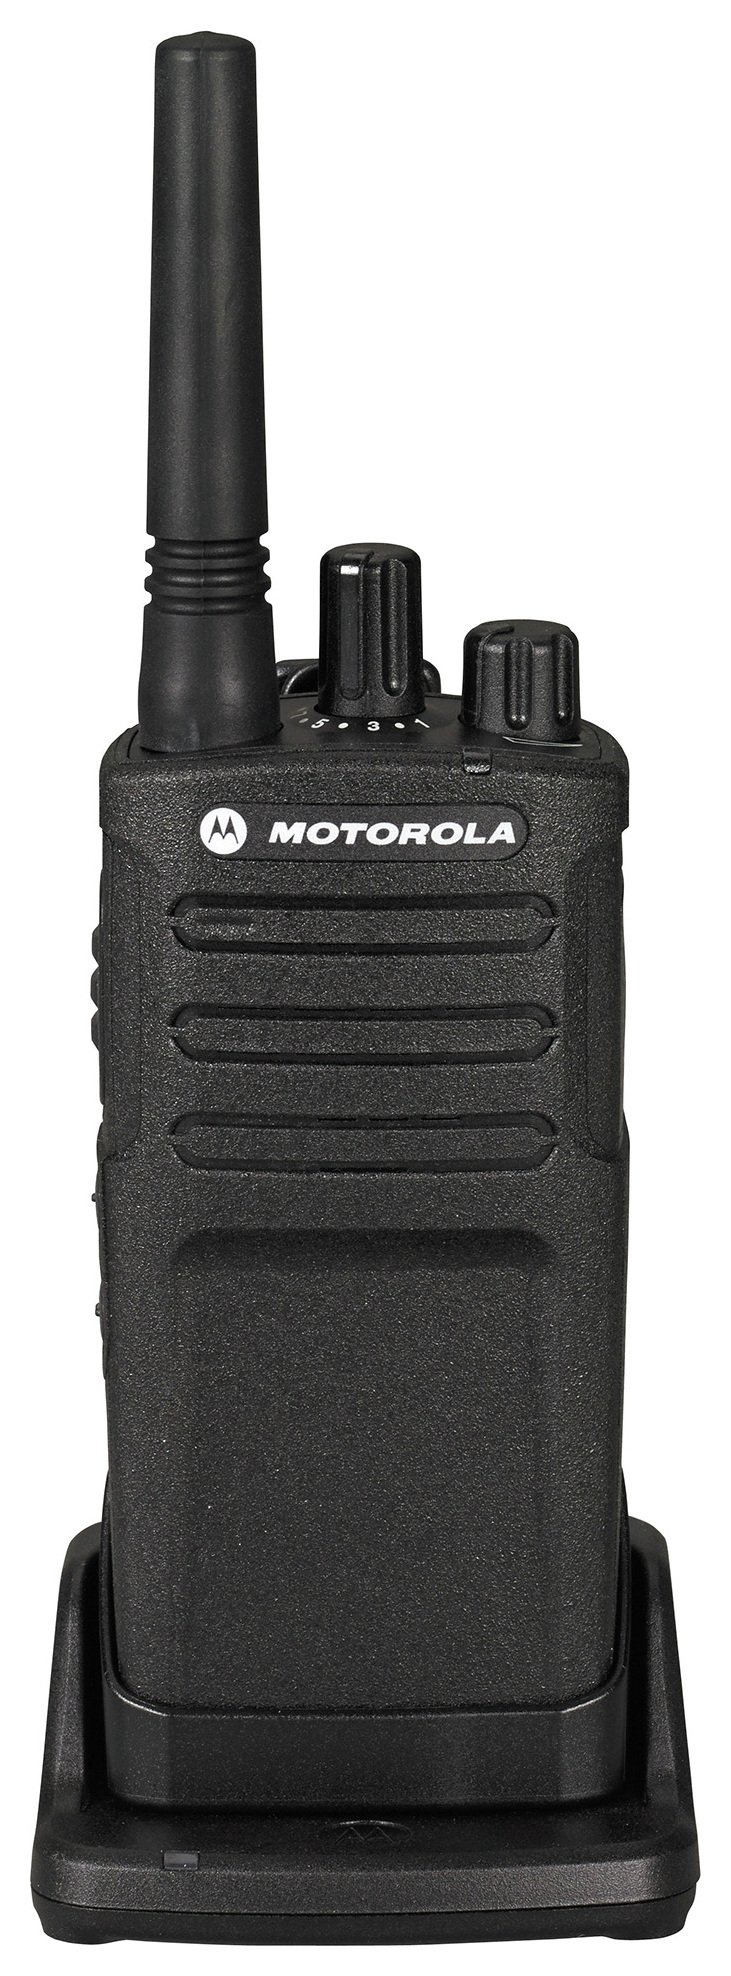 Motorola XT420 2 Way Radio with Single Charger